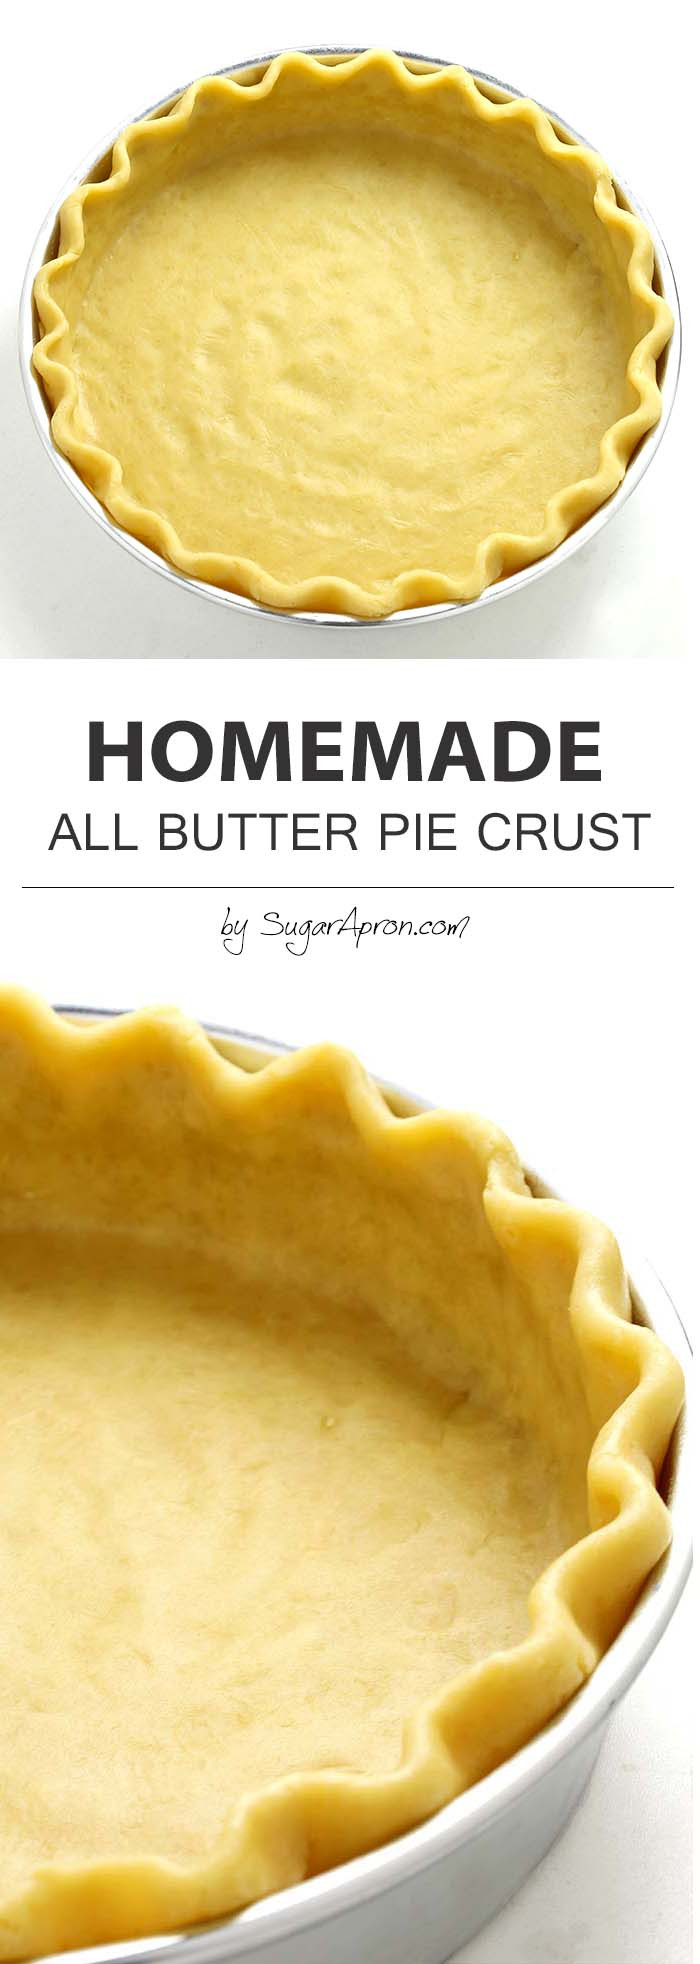 Recipes Using Pie Crust
 Homemade All Butter Pie Crust Sugar Apron